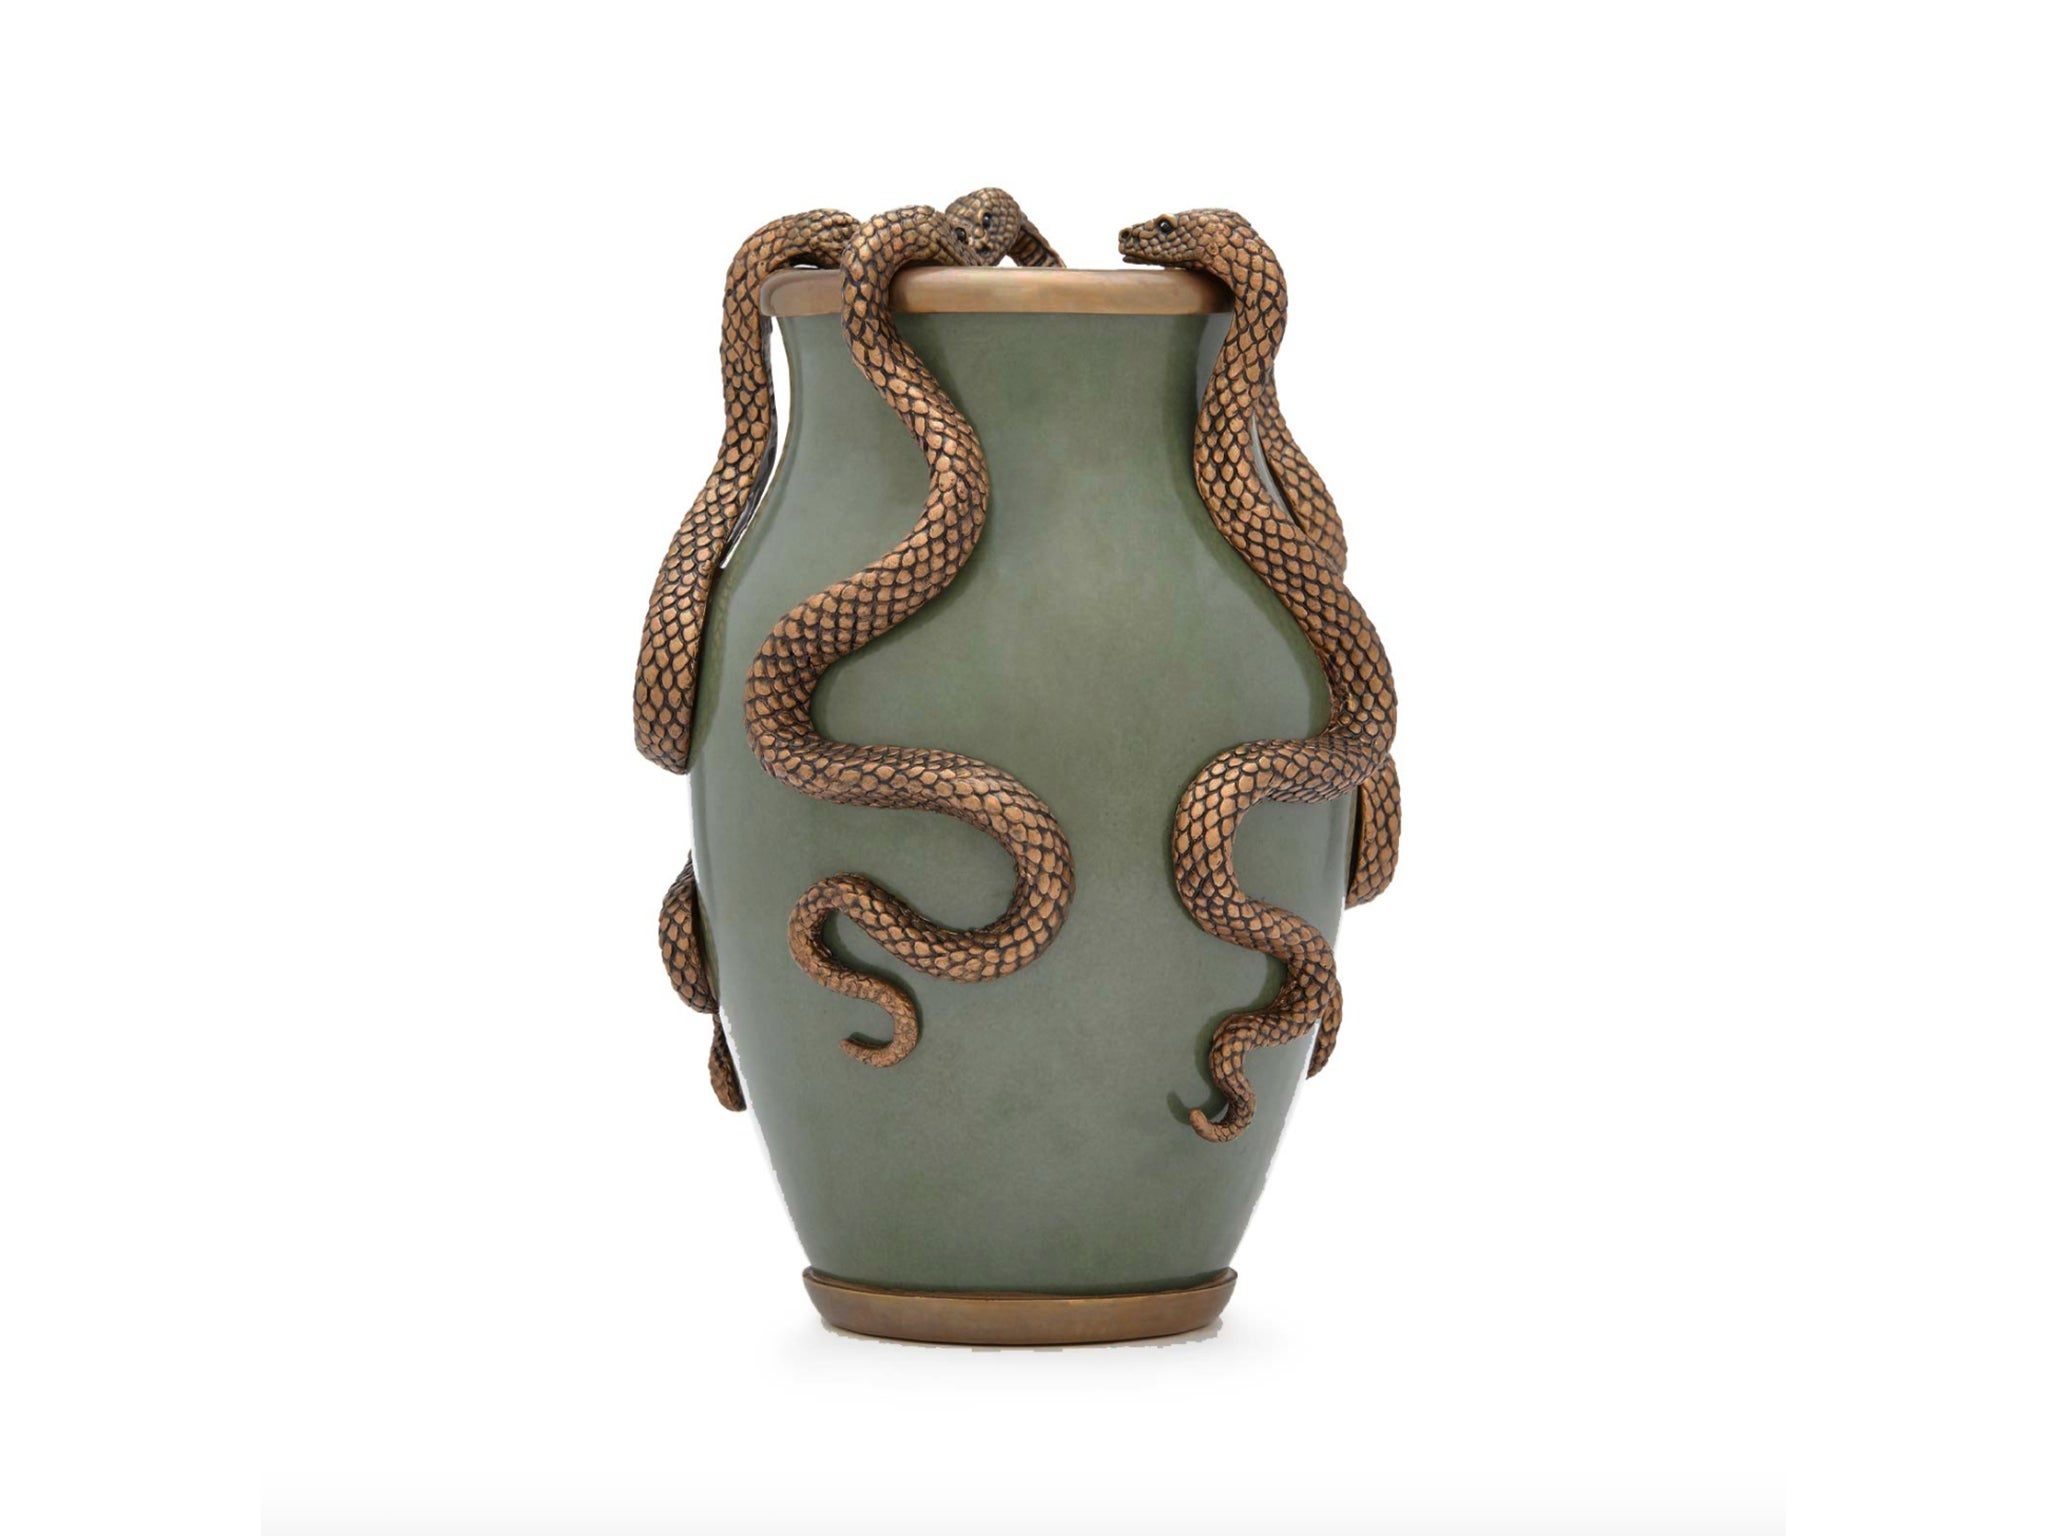 Vintage 1940's Artistic Potteries Vase Scented Candle Cactus Flower